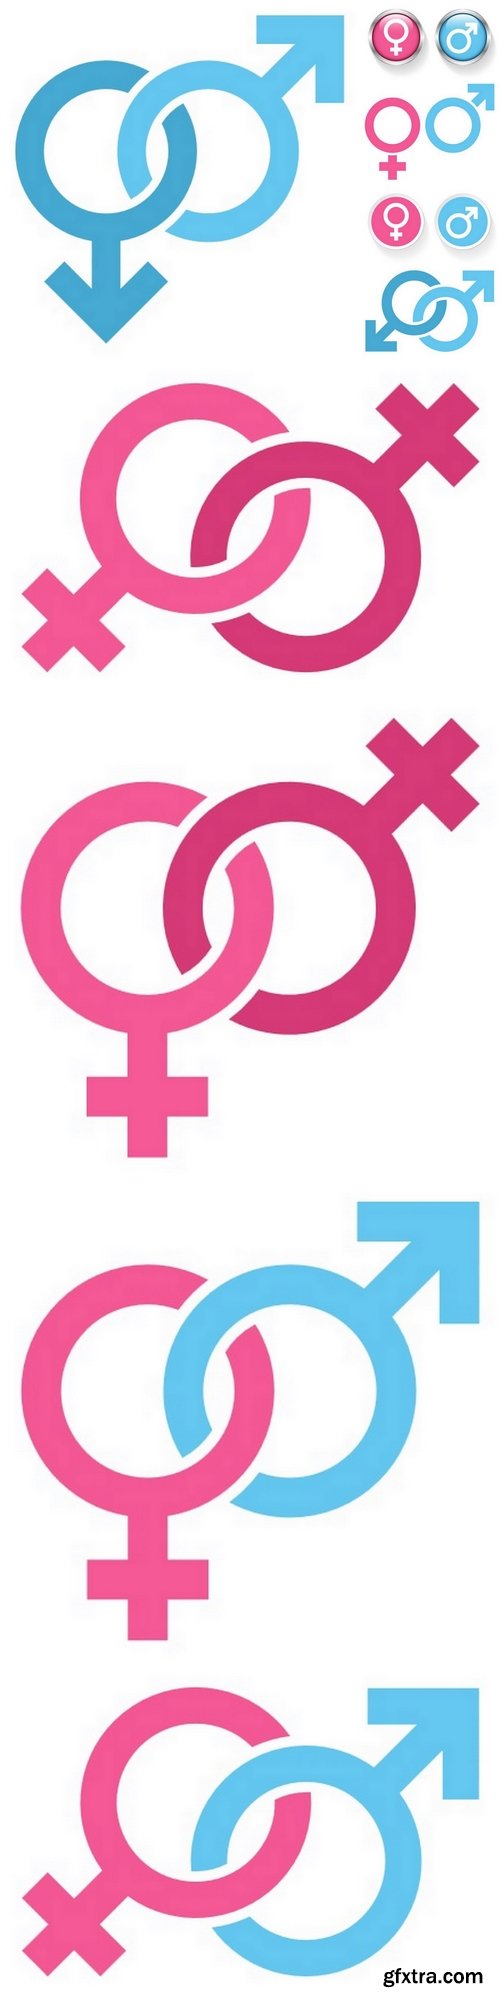 Male Female Symbol